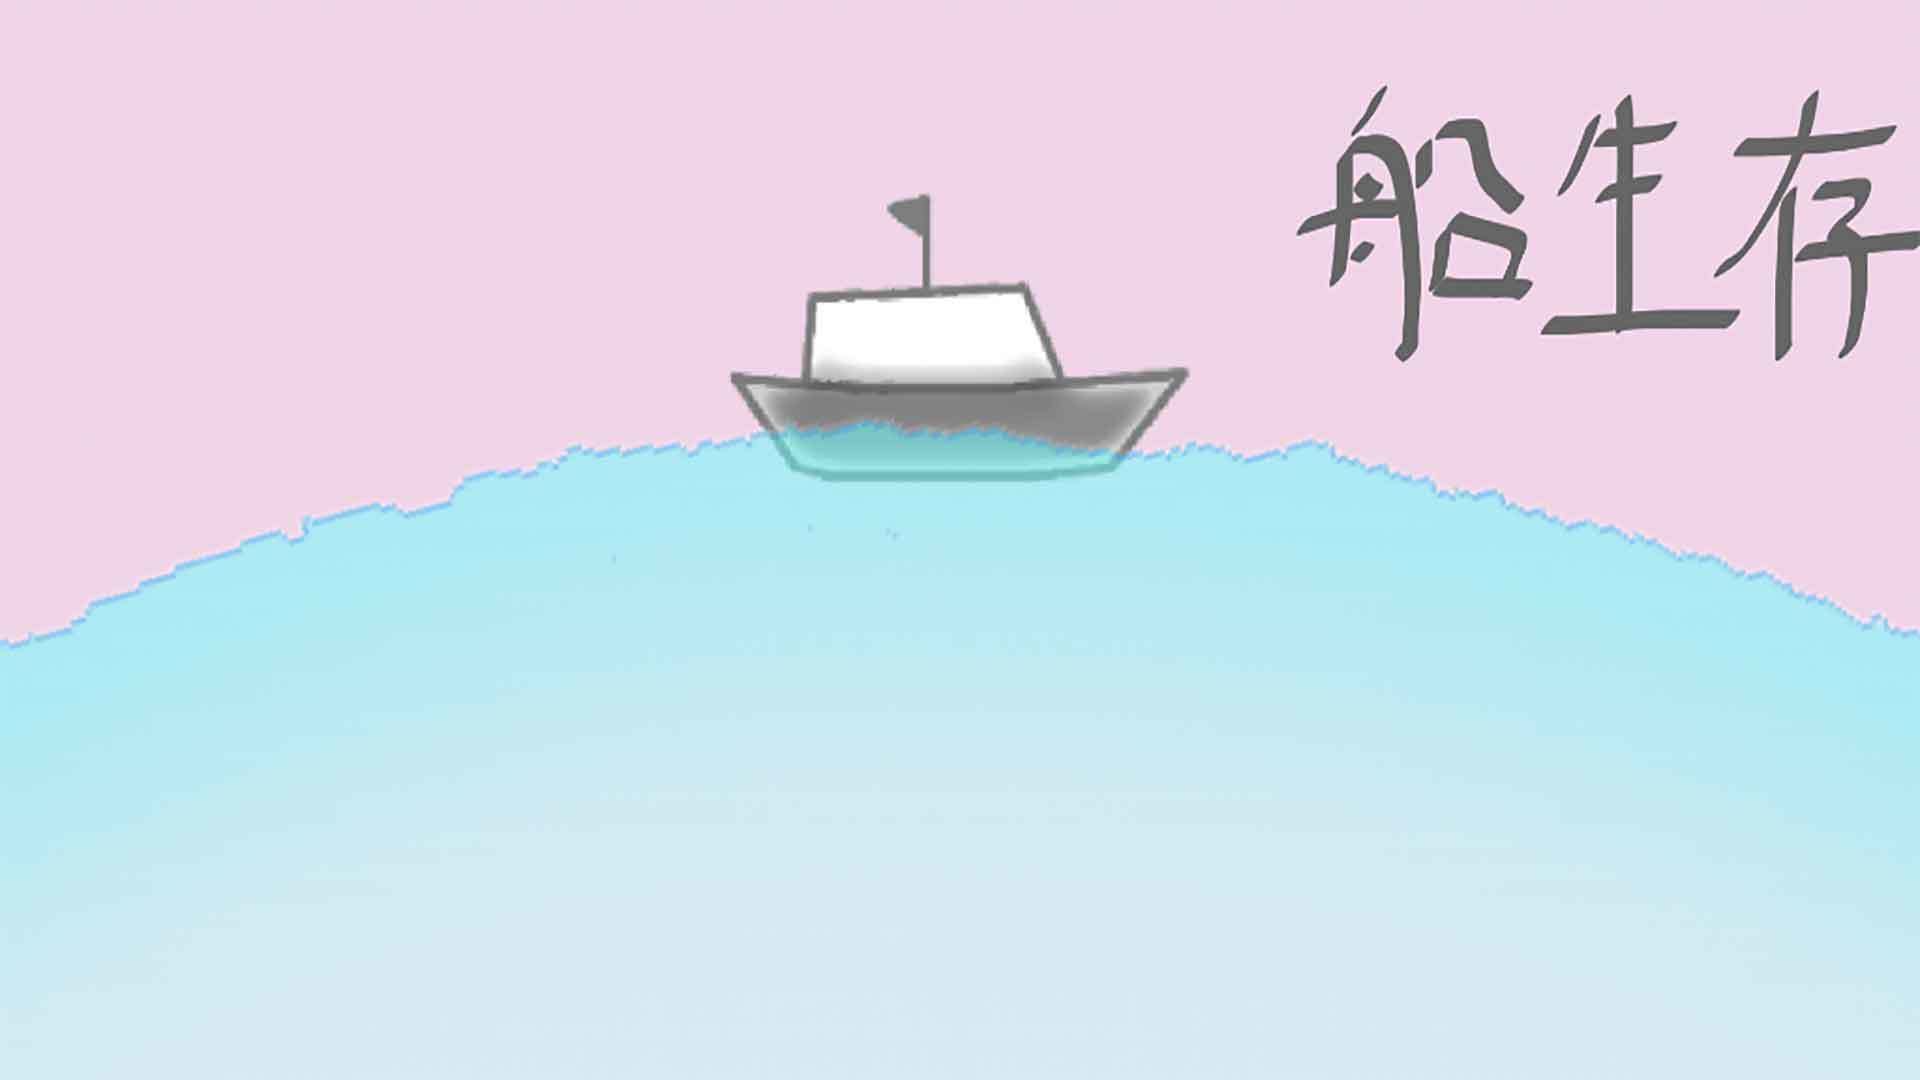 Banner of 船生存 